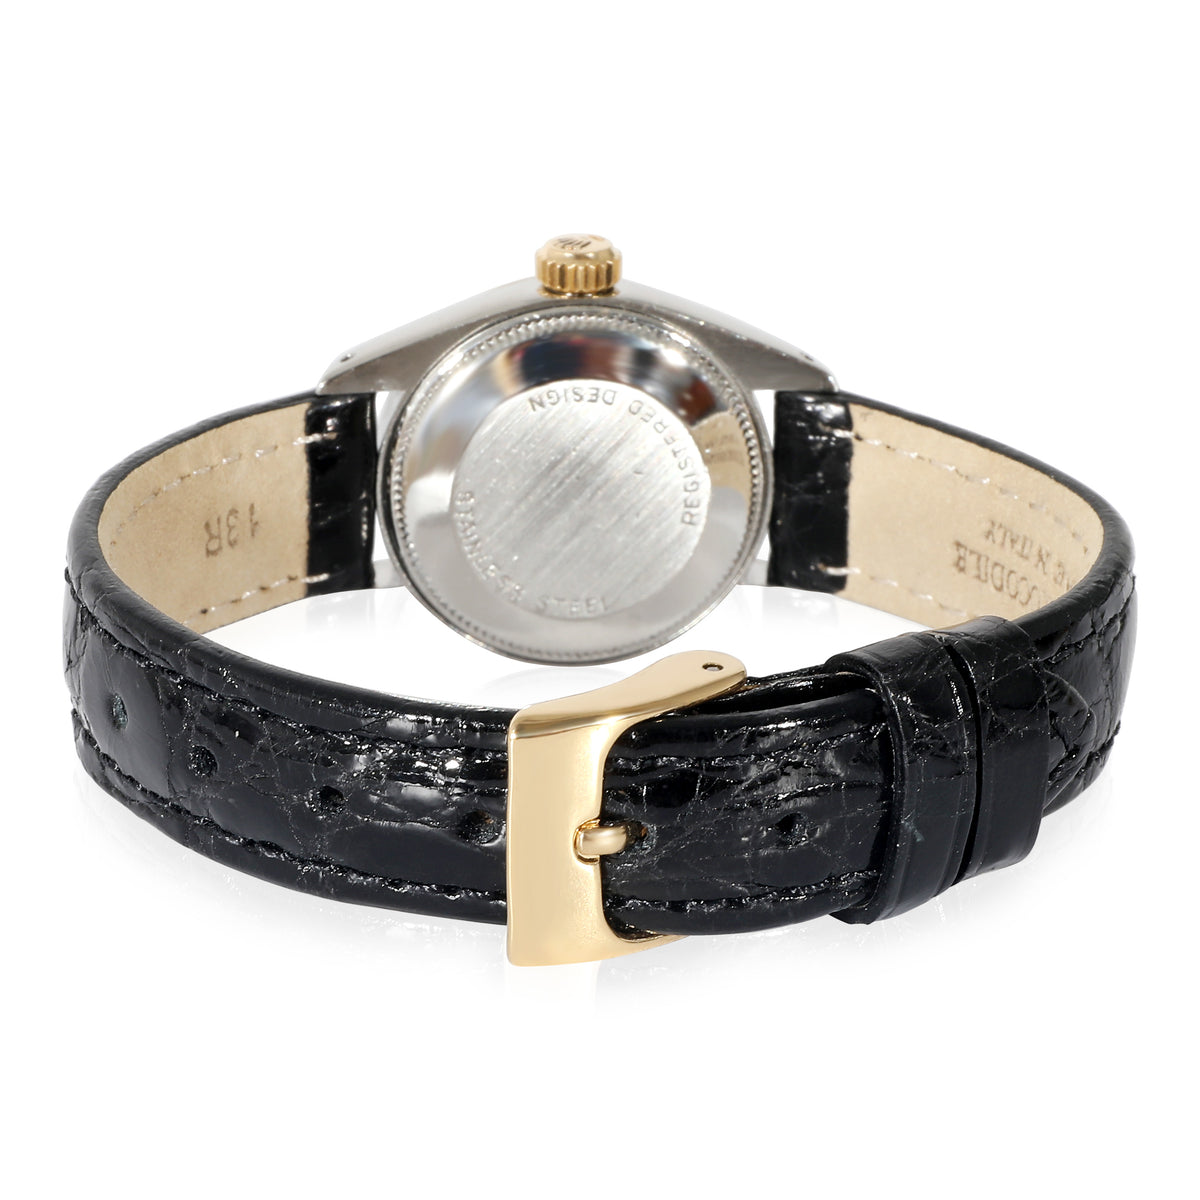 Rolex Date 6917 Women's Watch in 14kt Stainless Steel/Yellow Gold